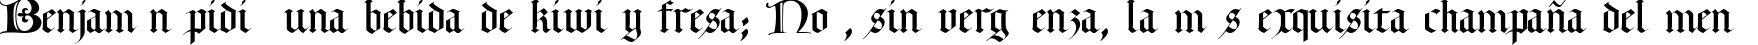 Пример написания шрифтом Lombardia текста на испанском